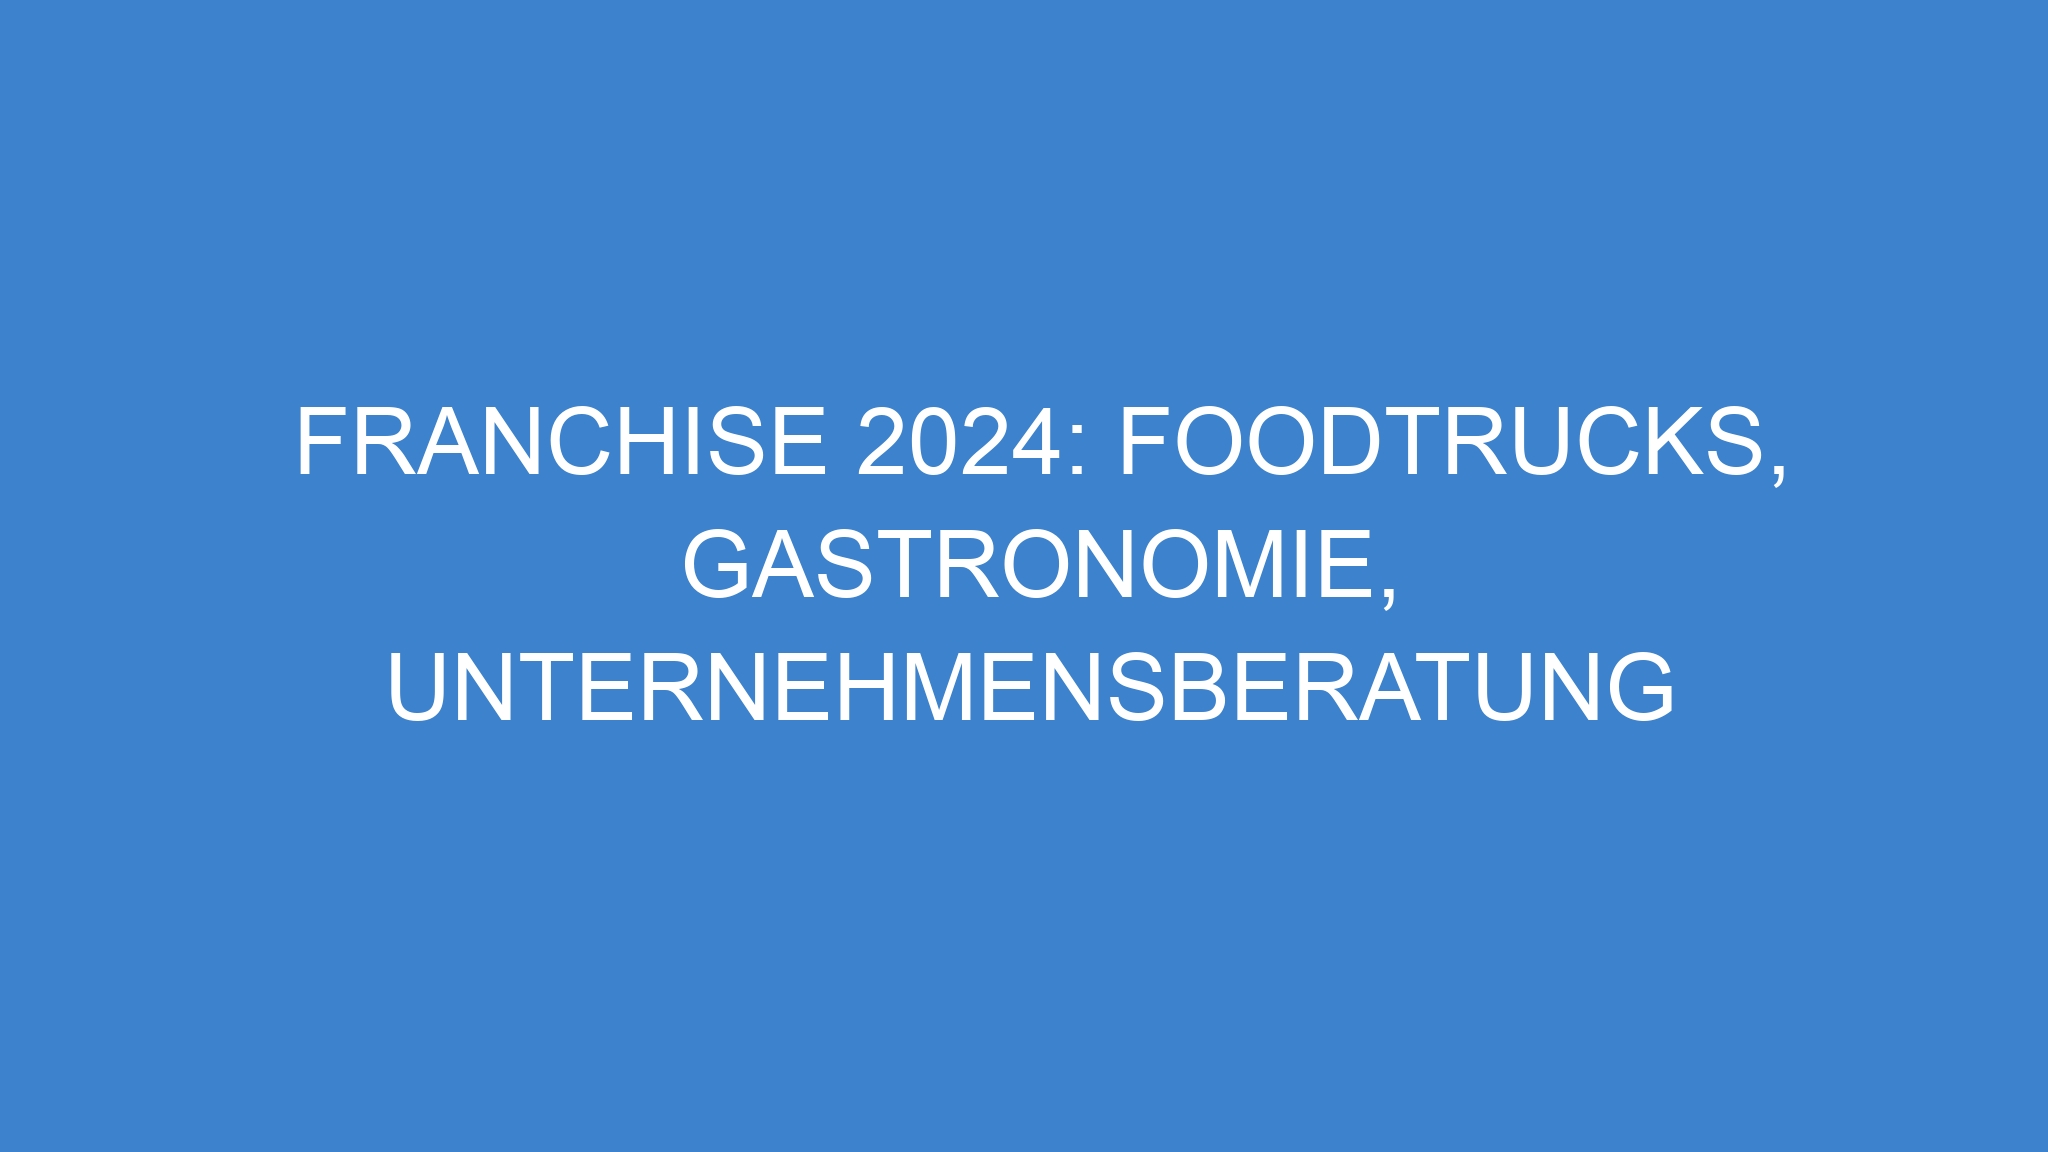 Franchise 2024: Foodtrucks, Gastronomie, Unternehmensberatung